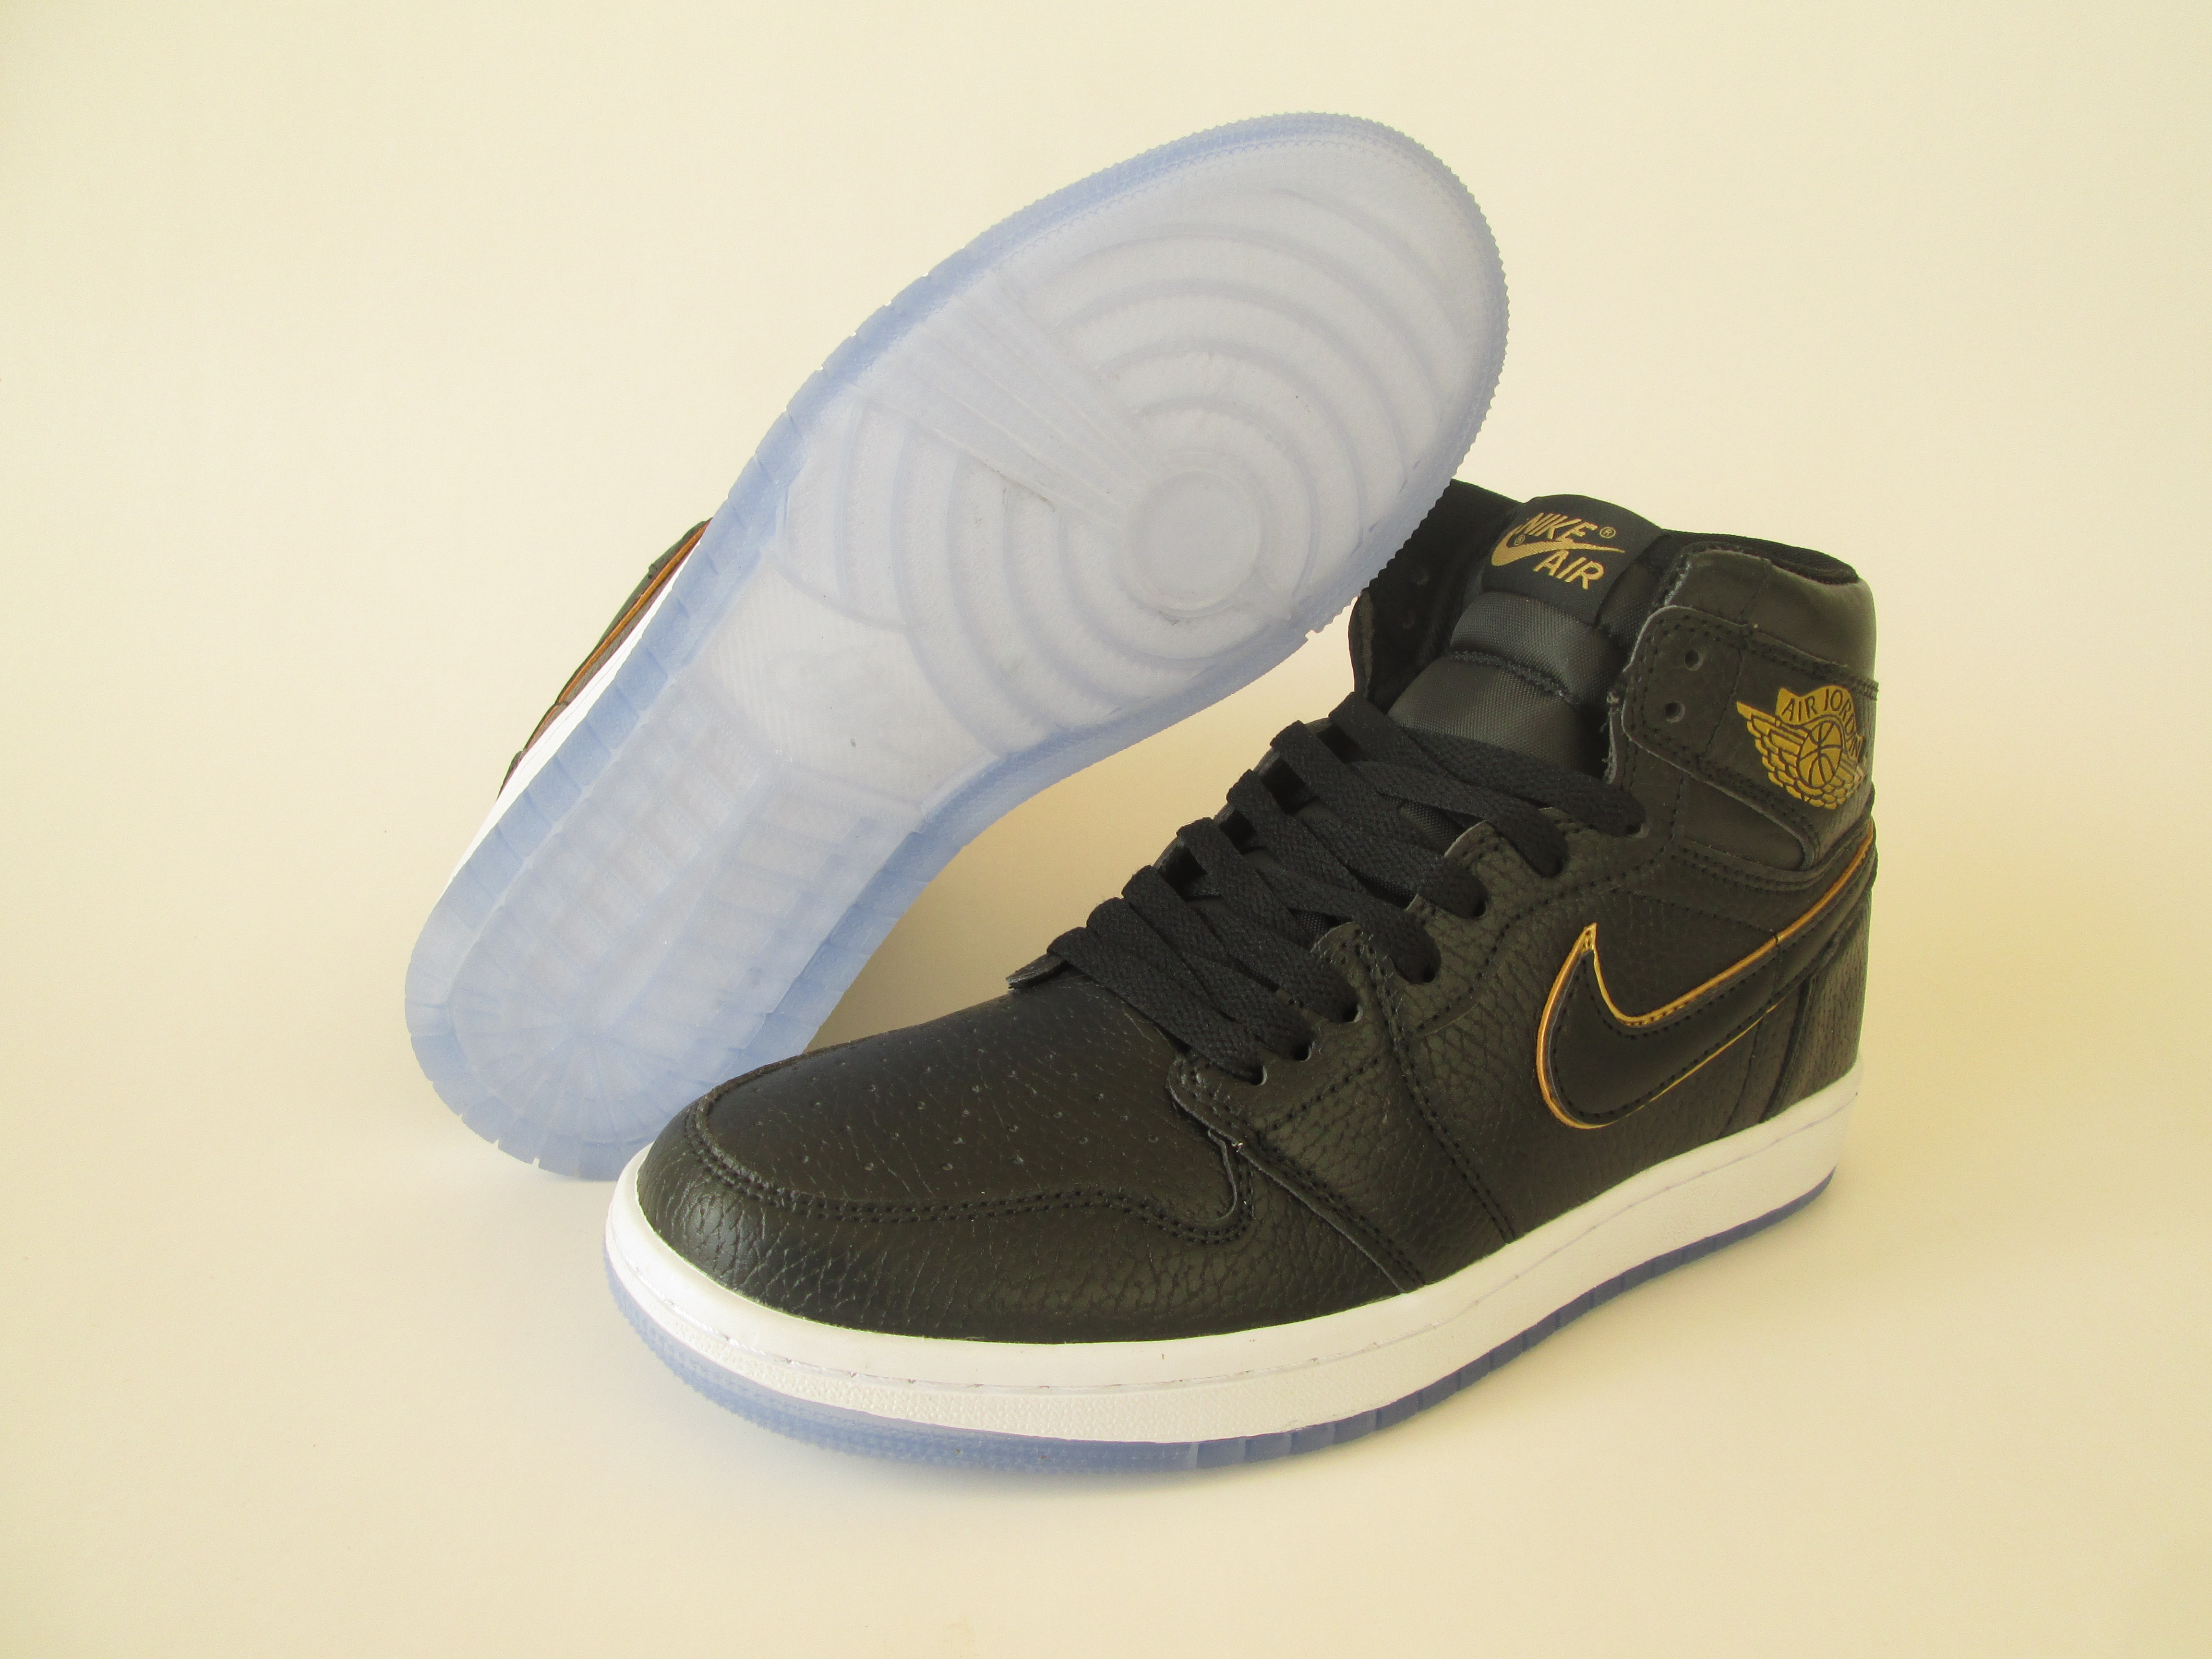 New Air Jordan 1 All Star Black Gold Shoes - Click Image to Close